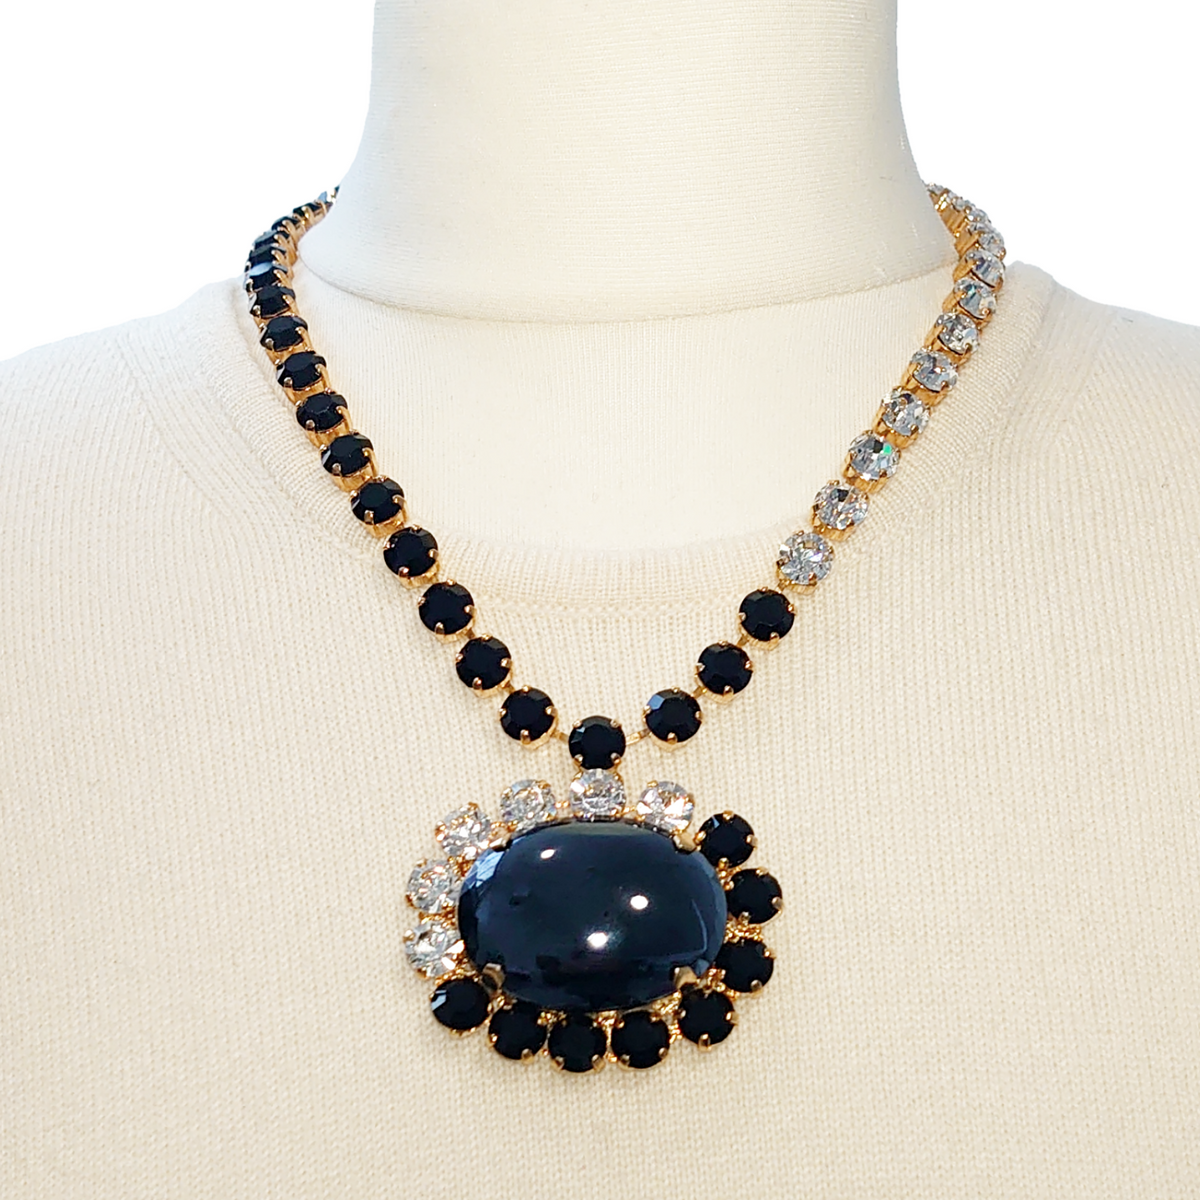 Bespoke Swarovski Crystals Necklace with Vintage Precious Stone - Black